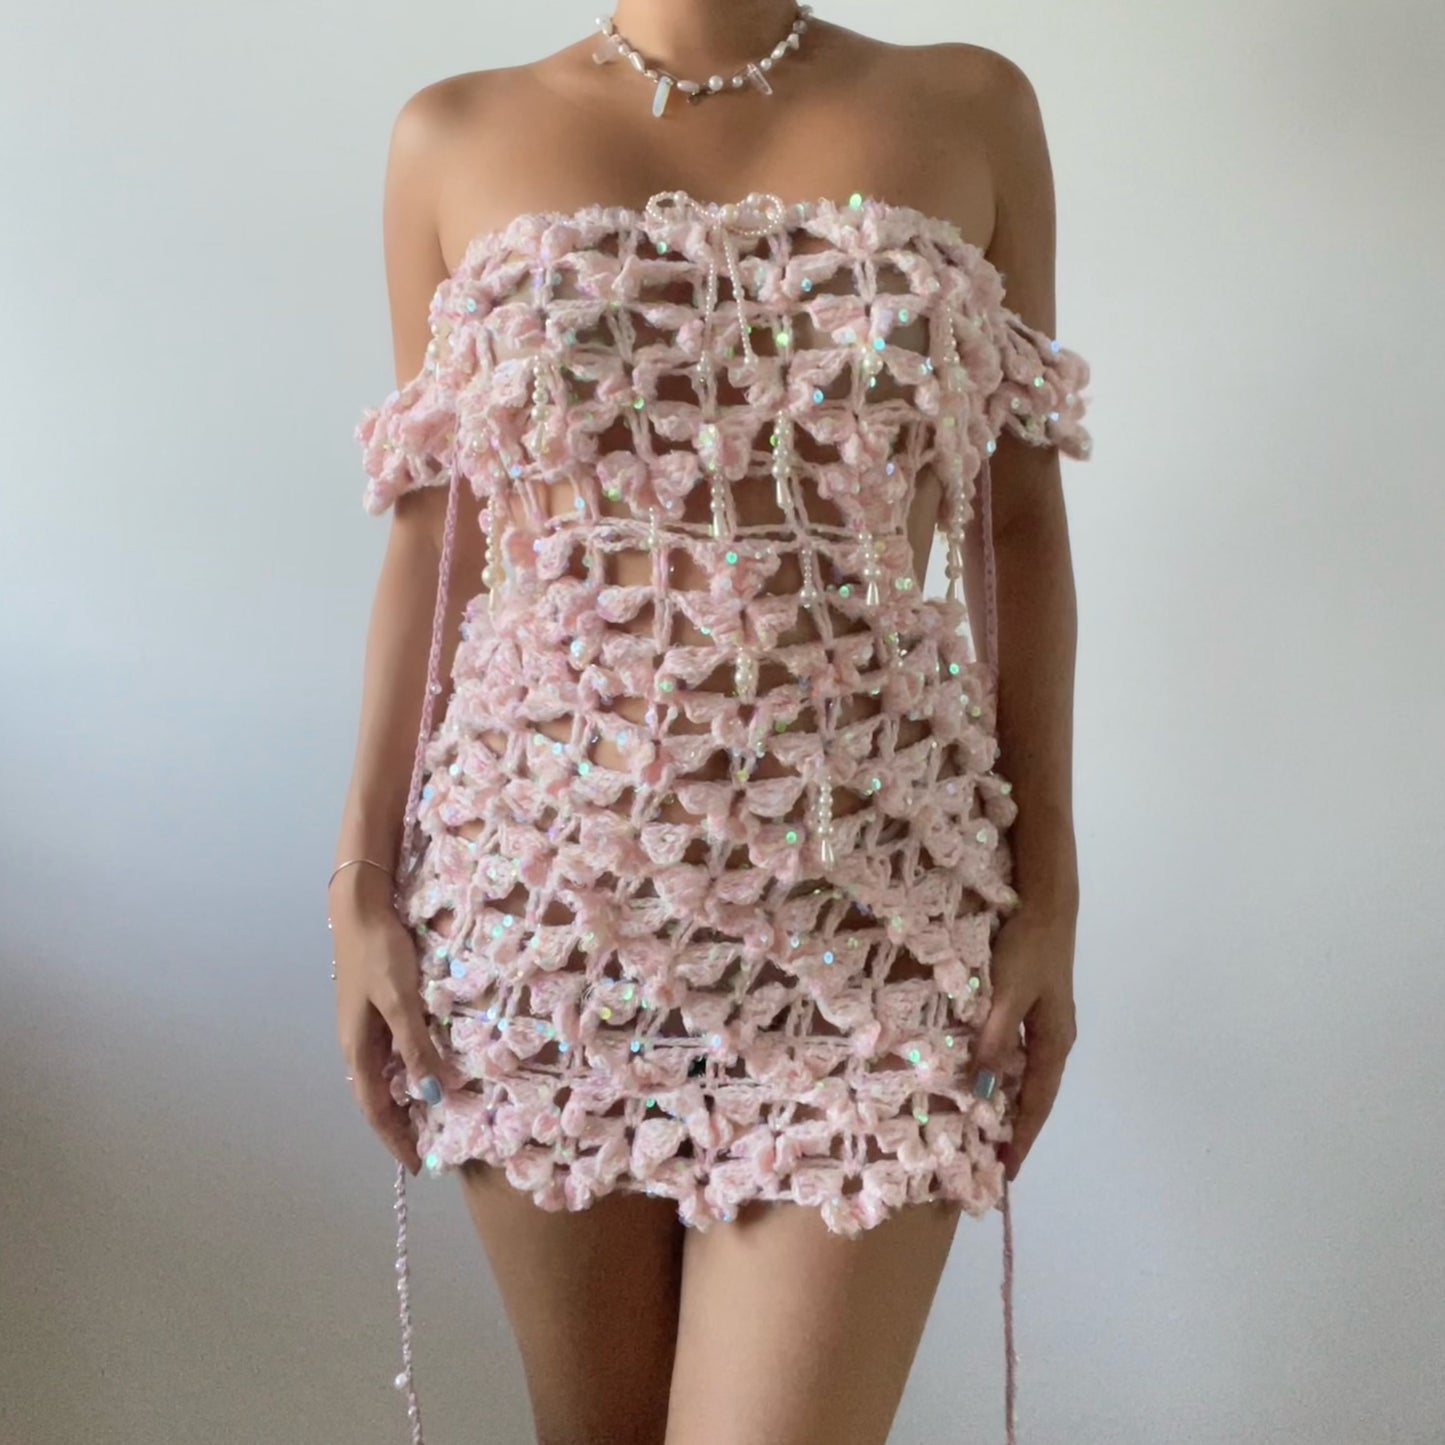 Butterfly dress - Pink